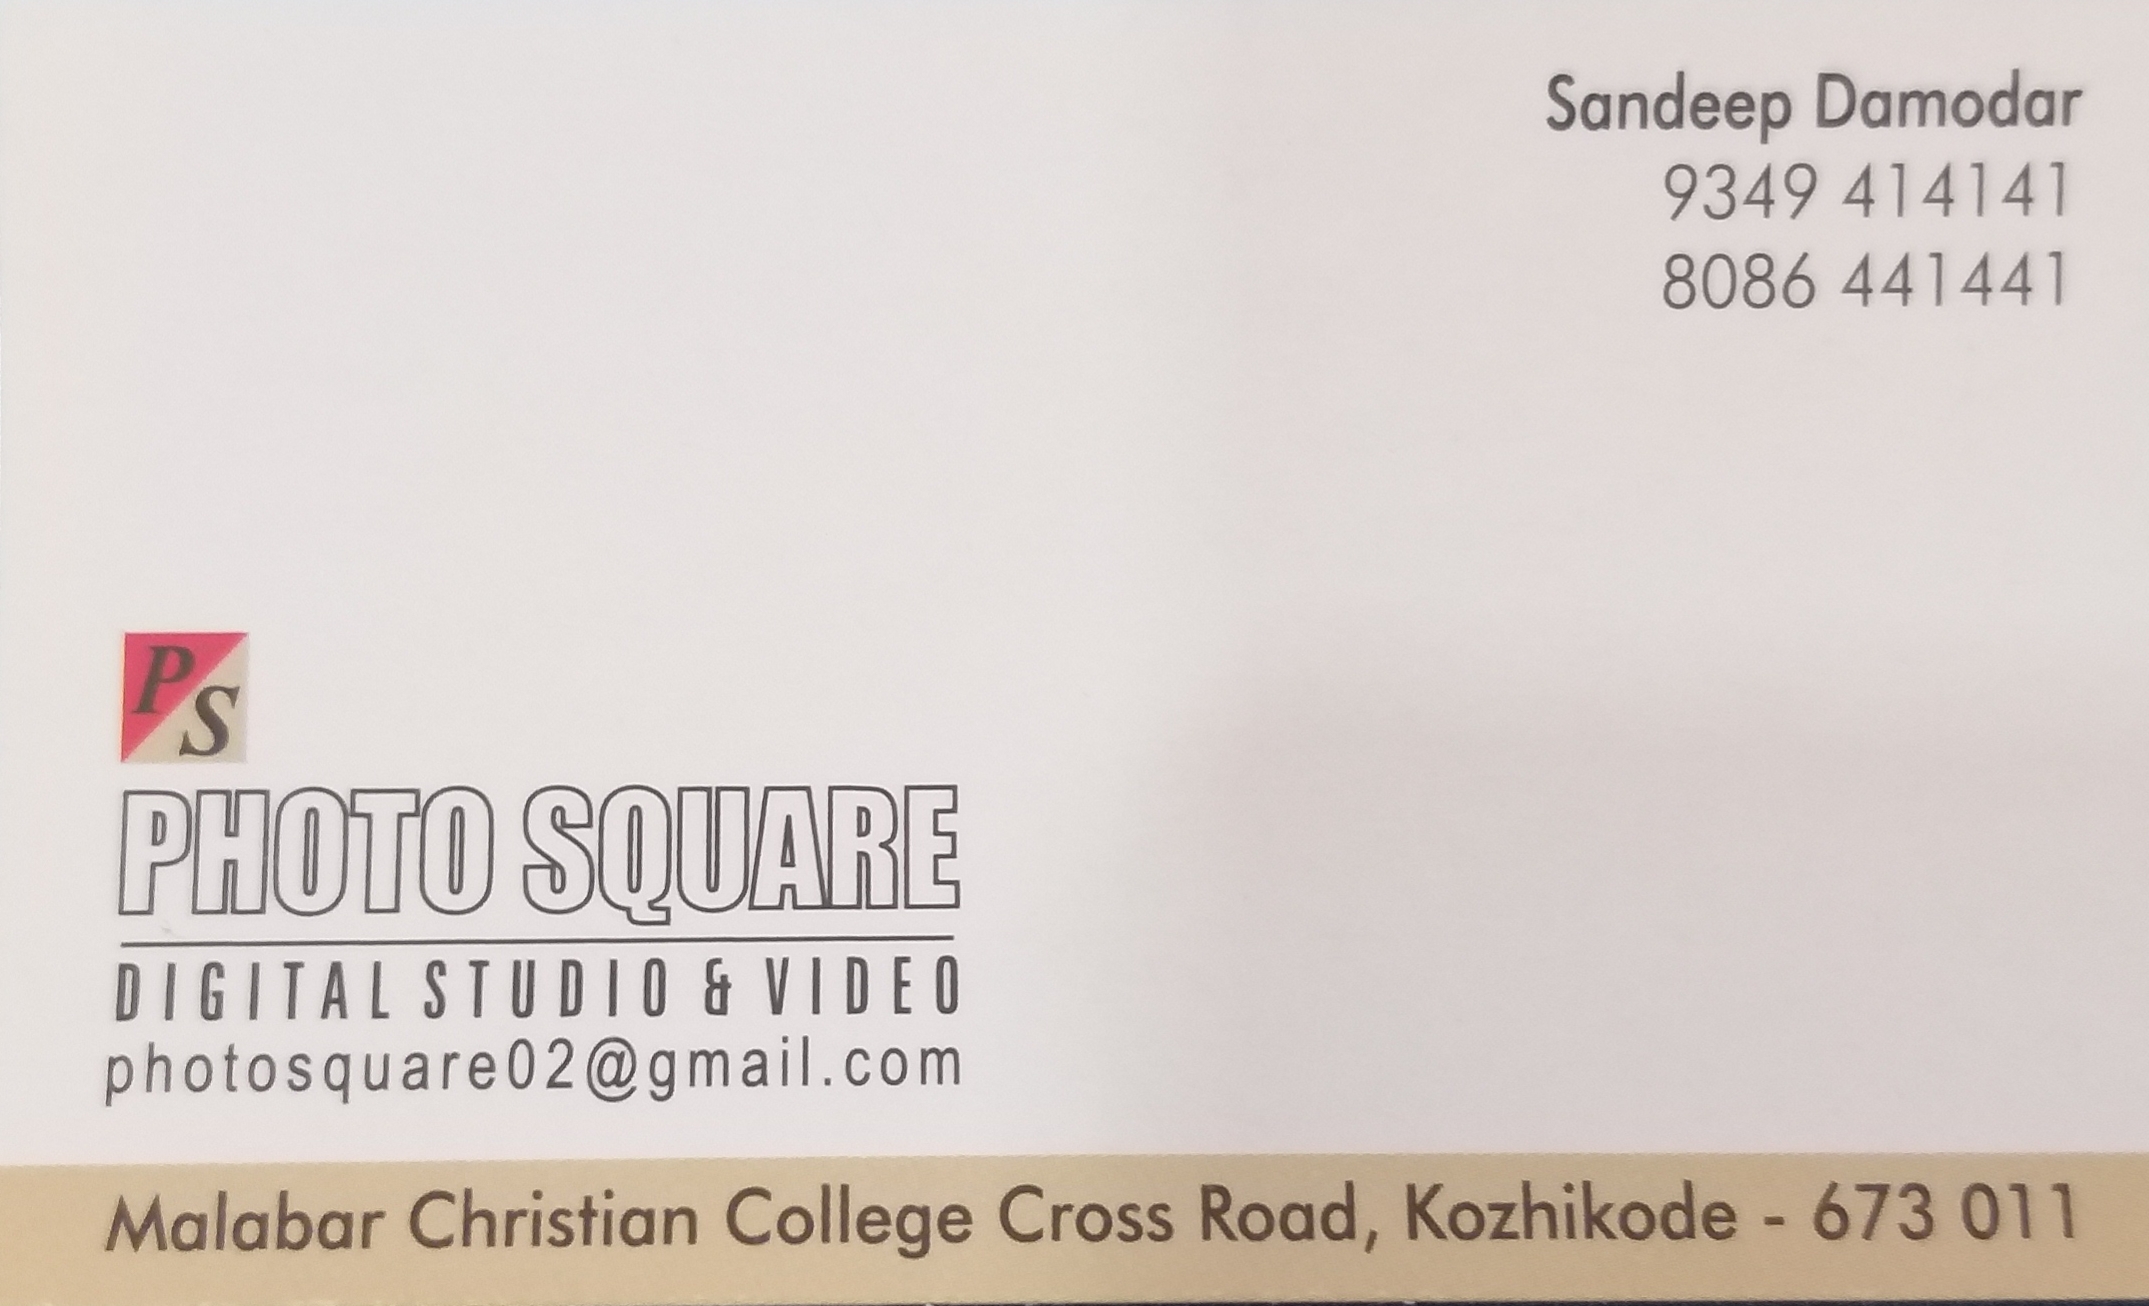 Photo square, STUDIO & VIDEO EDITING,  service in Kozhikode Town, Kozhikode